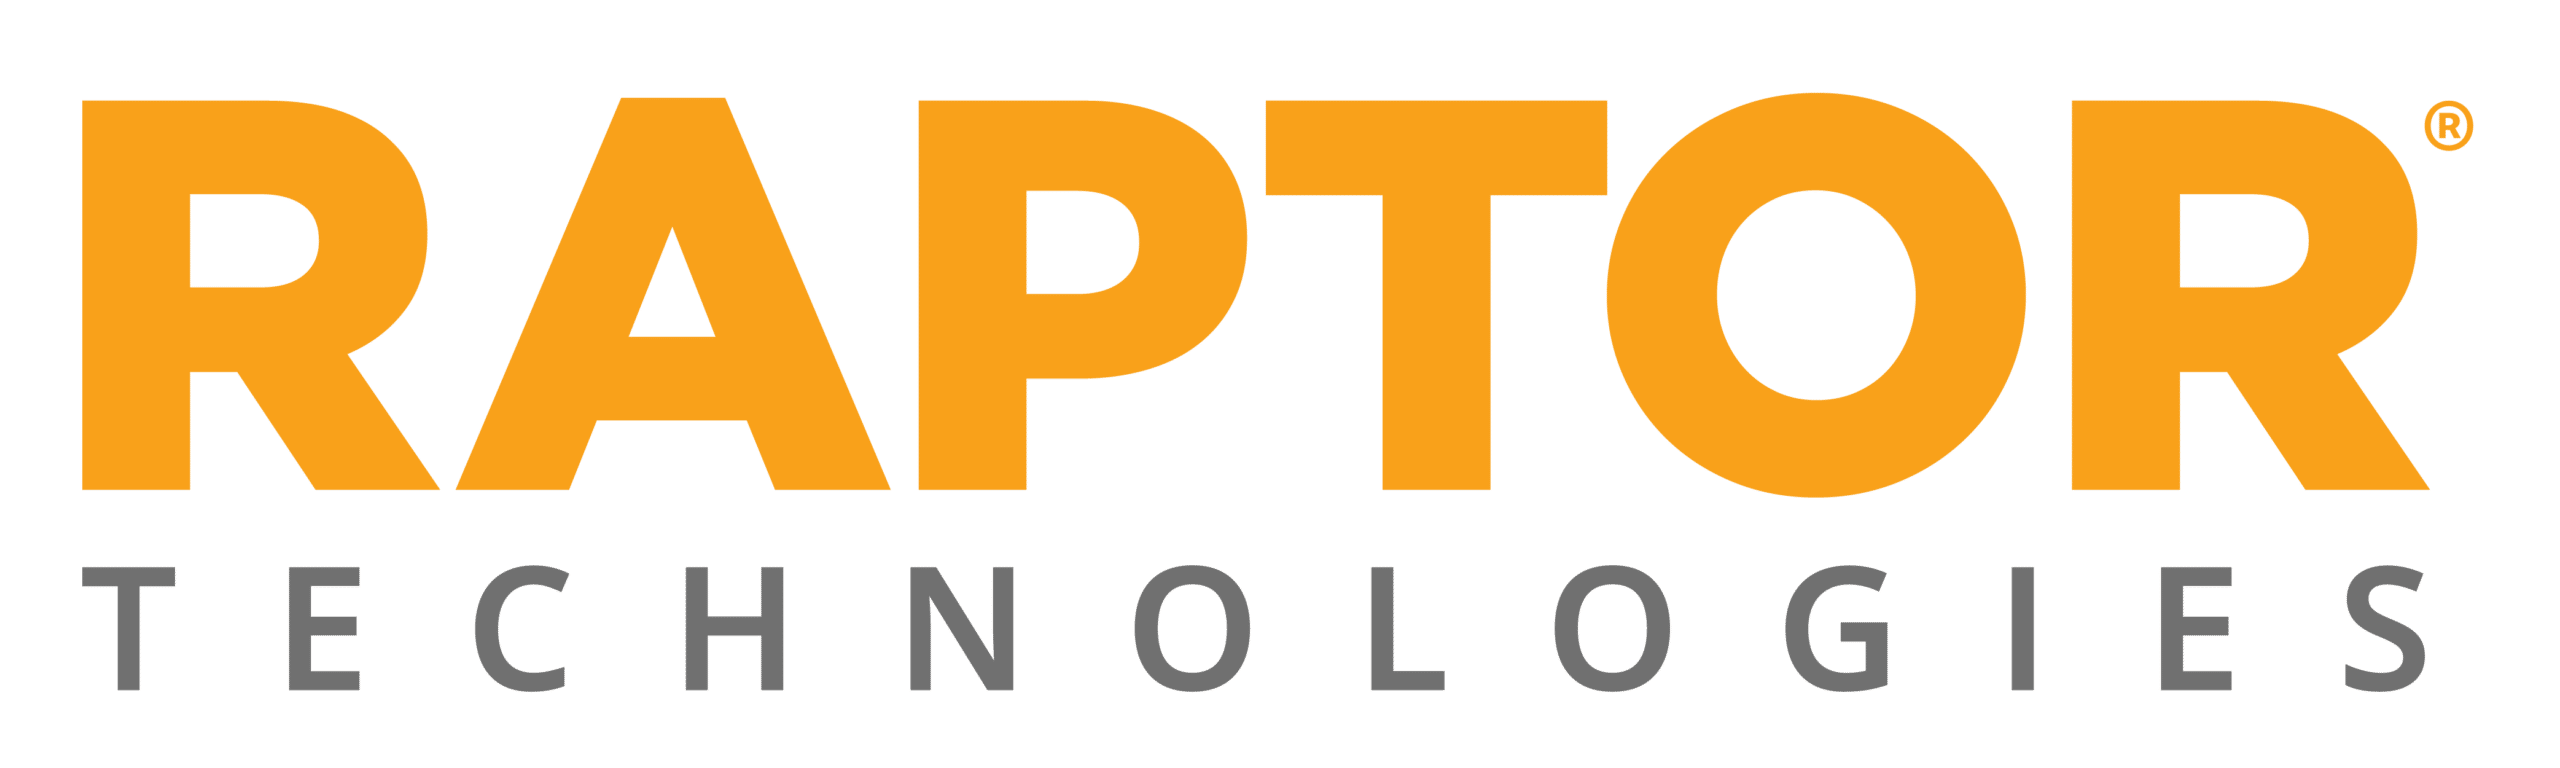 Raptor Technologies - School Safety Software